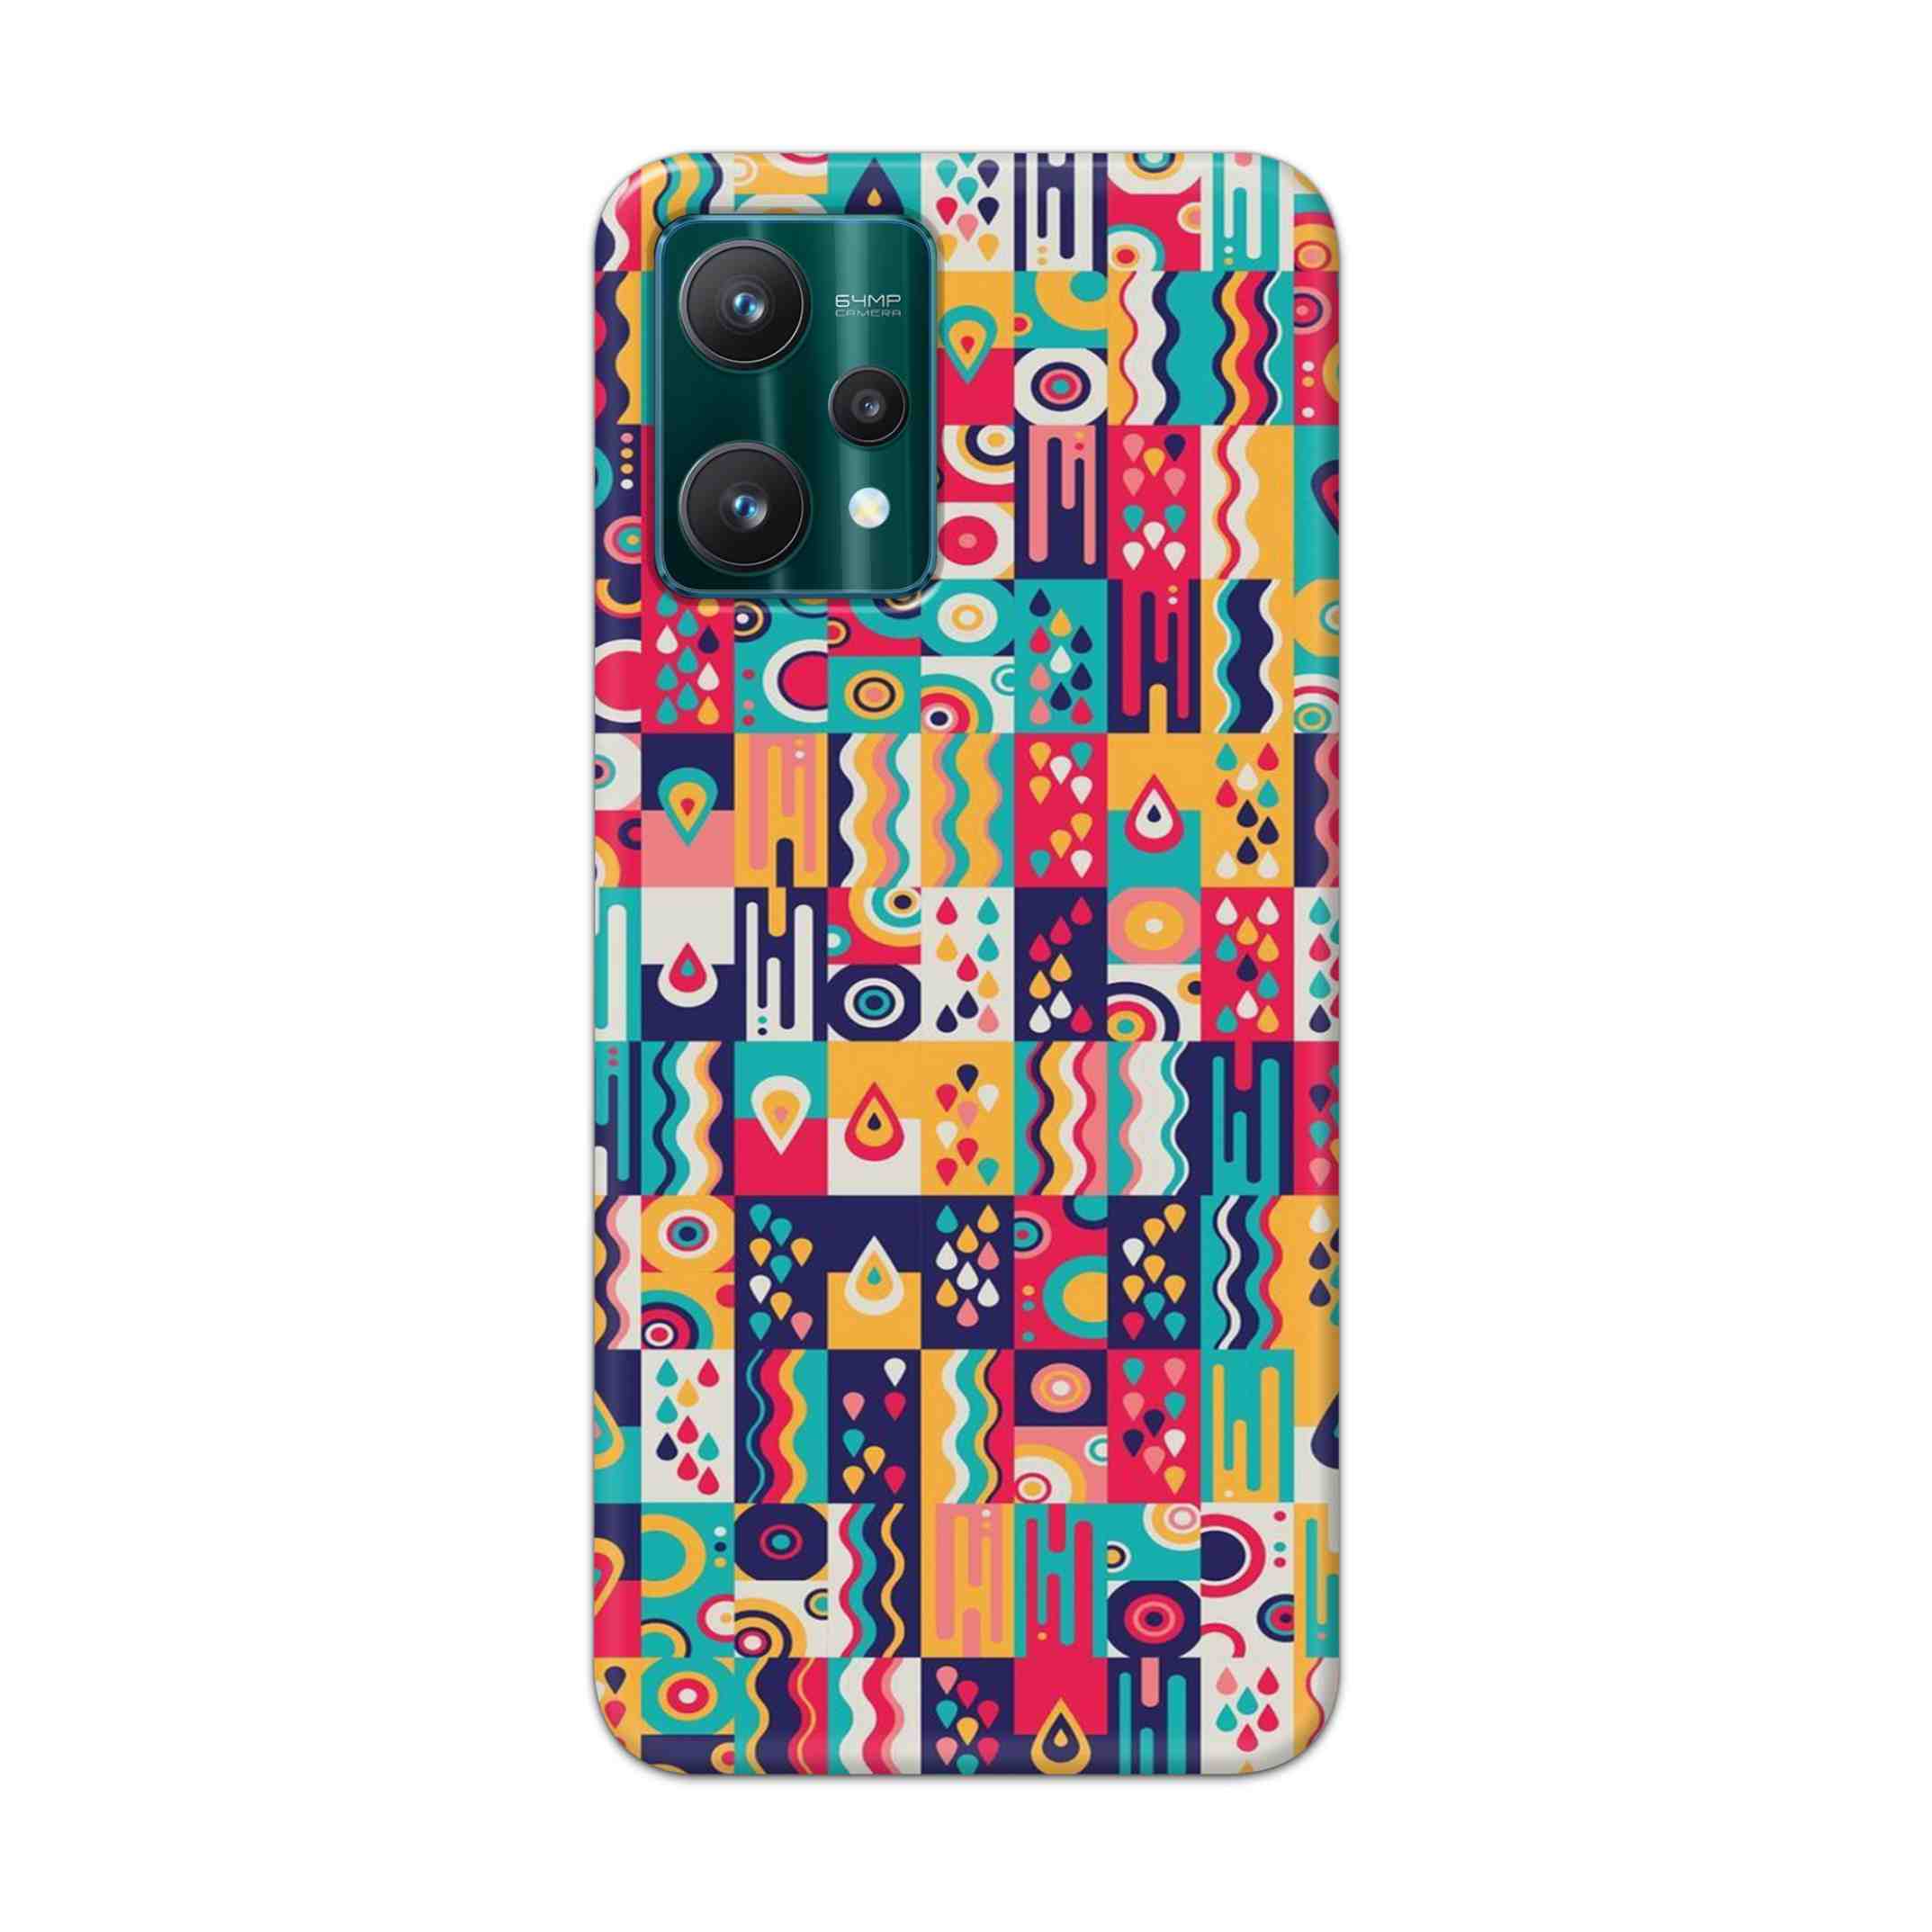 Buy Art Hard Back Mobile Phone Case Cover For Realme 9 Pro Online